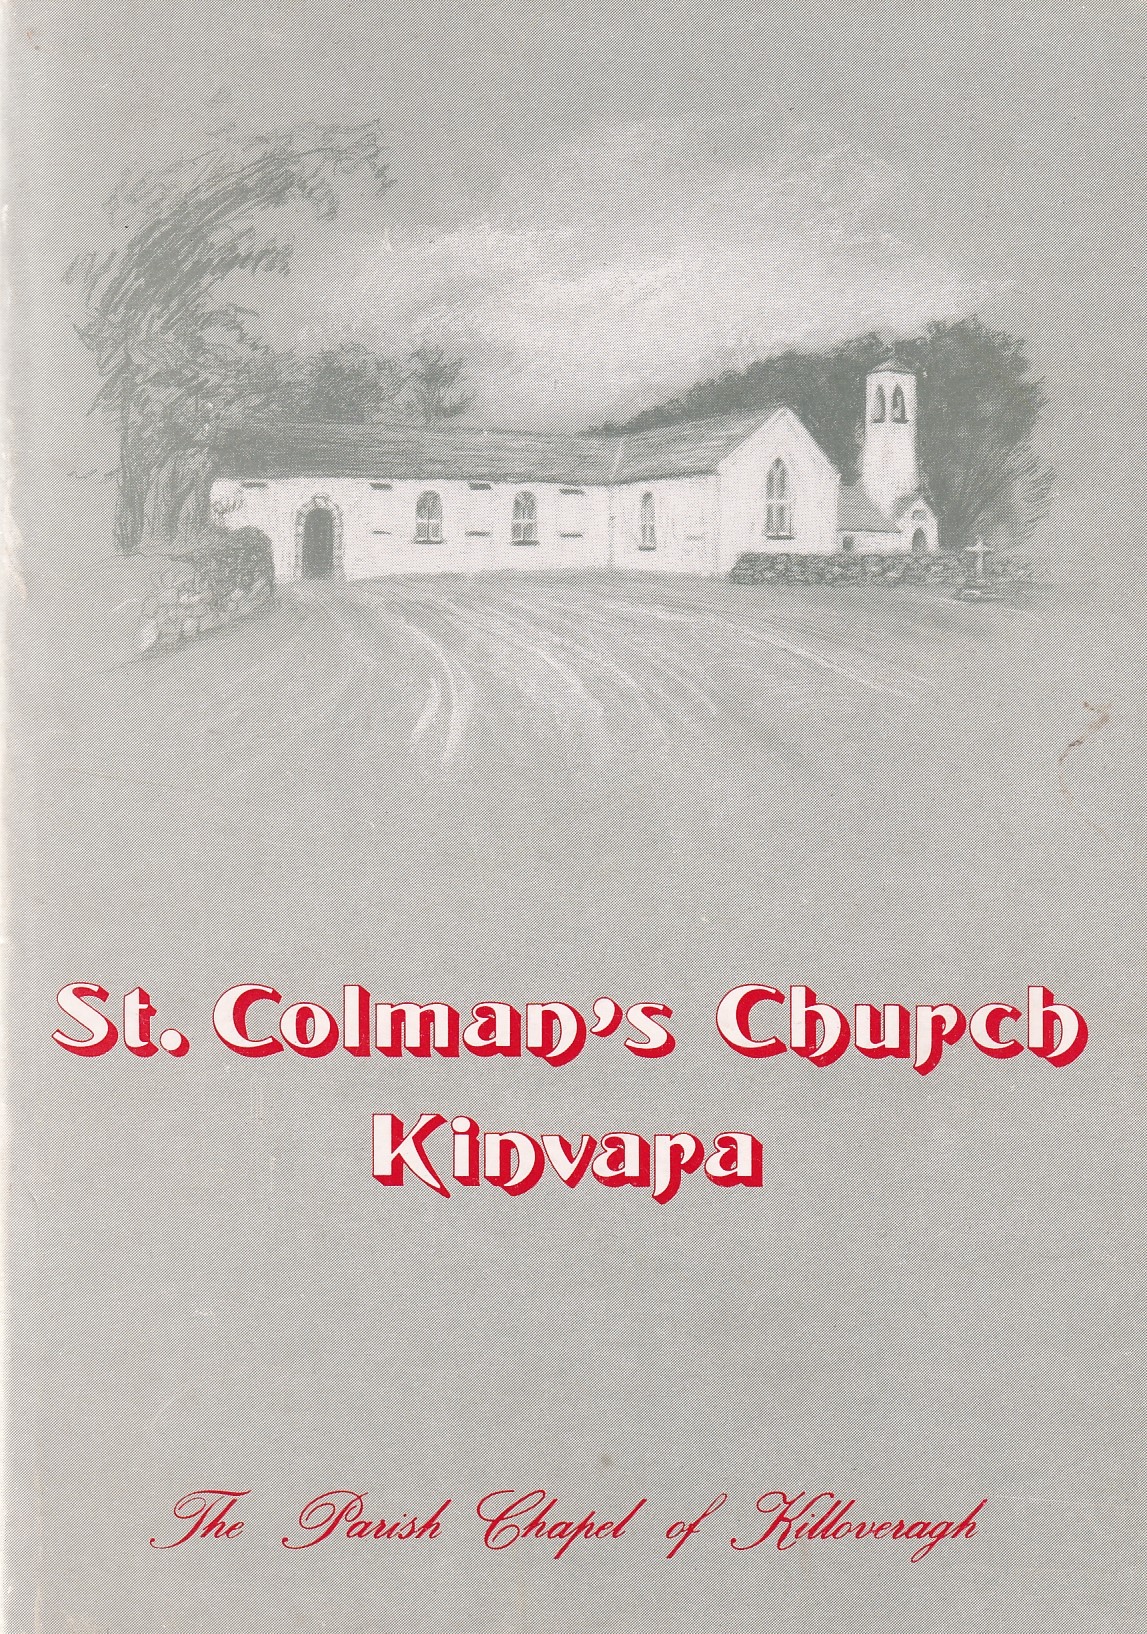 St. Colman’s Church Kinvara [Signed] | J. W. O'Connell | Charlie Byrne's